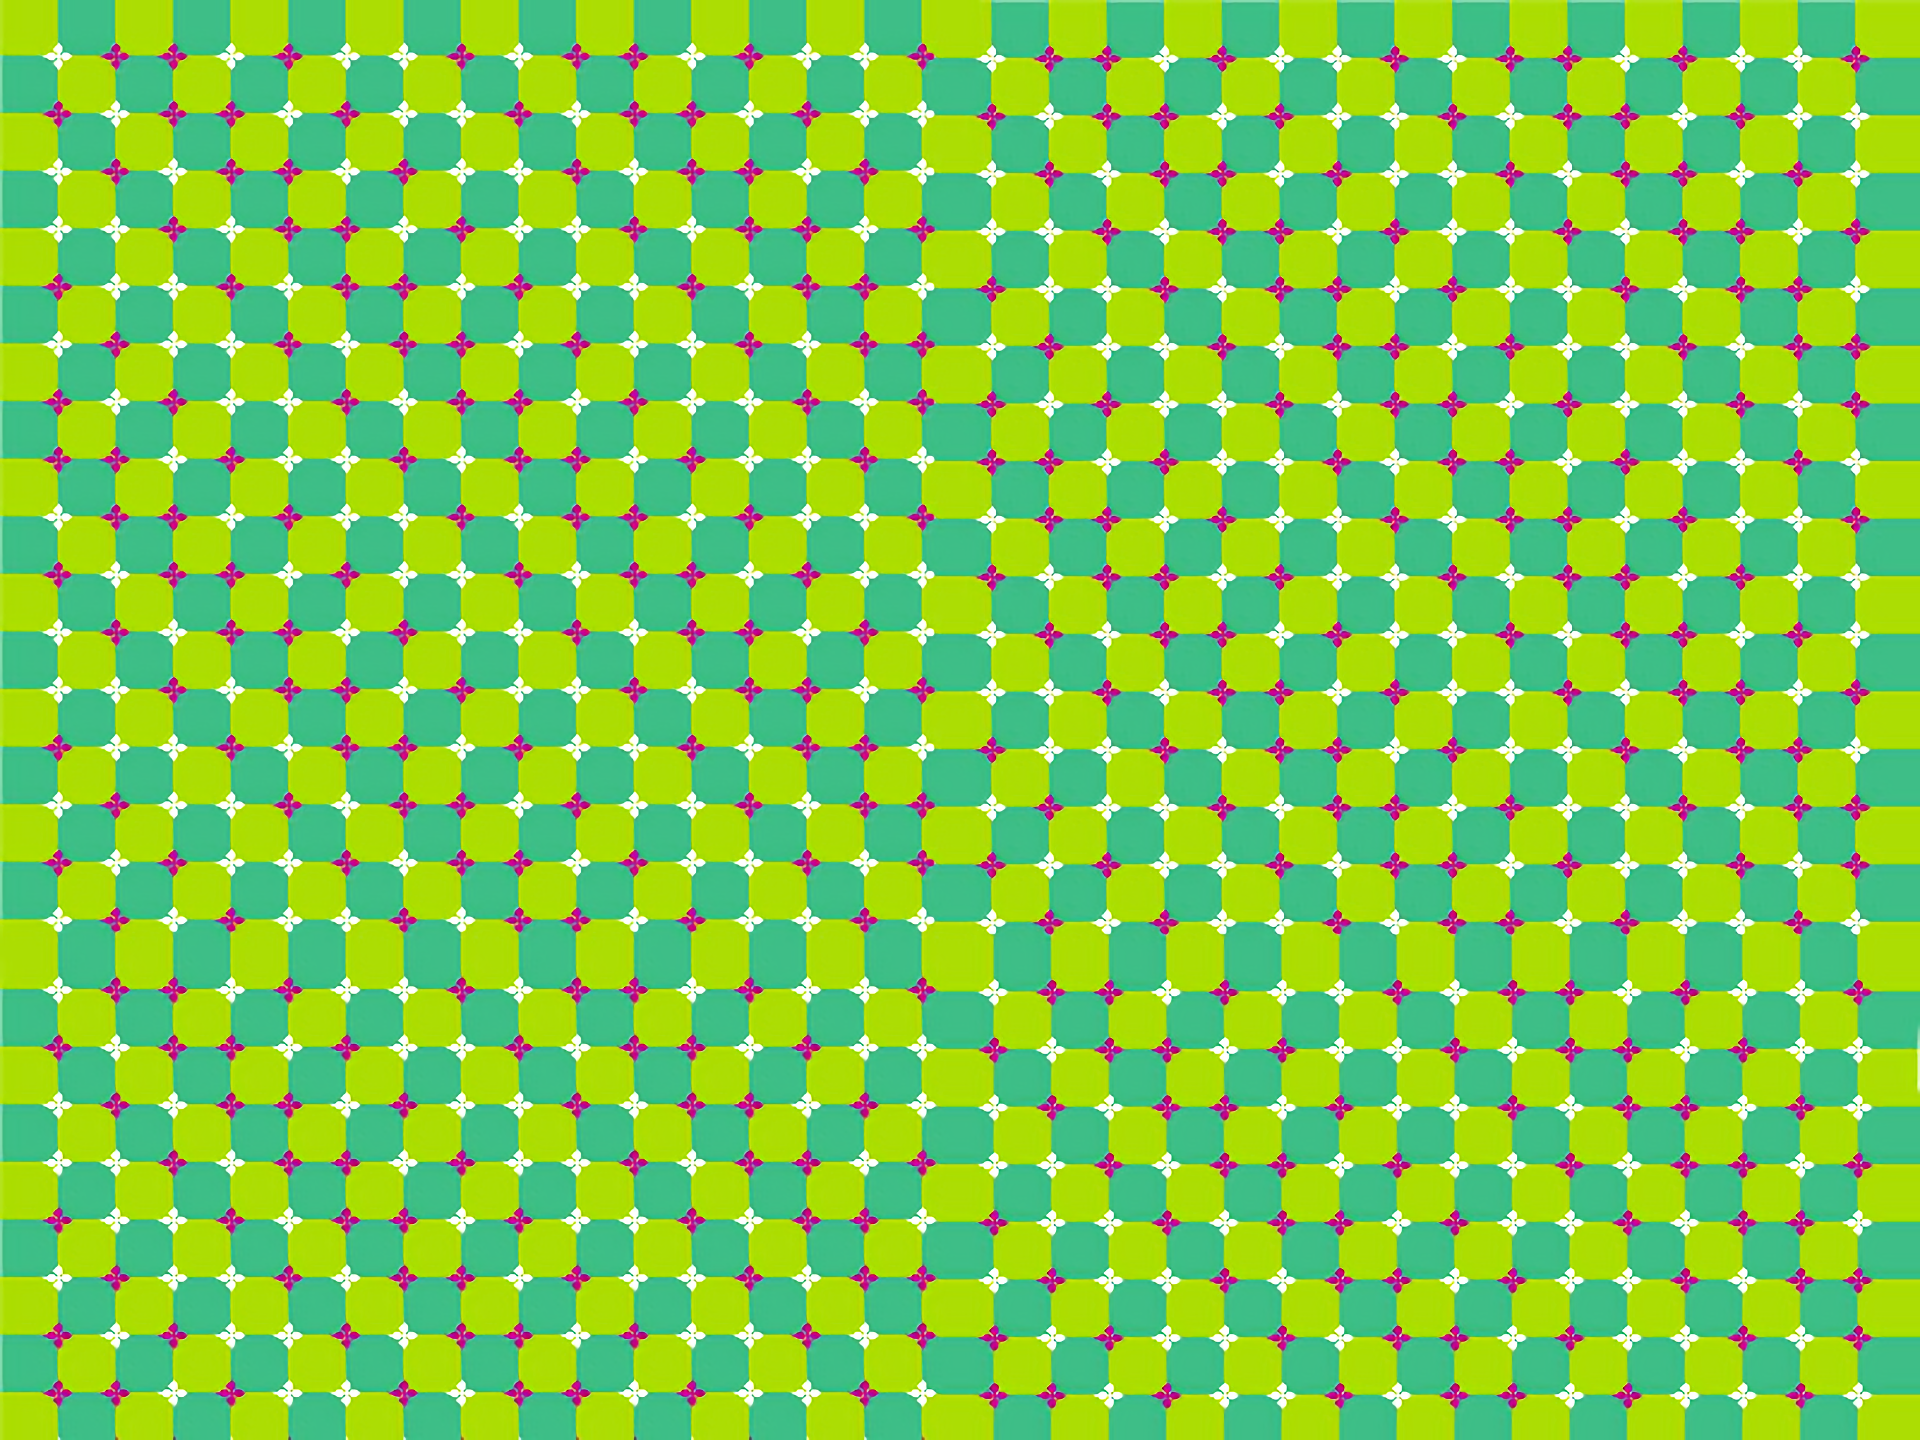 Illusion Optical 1920x1440